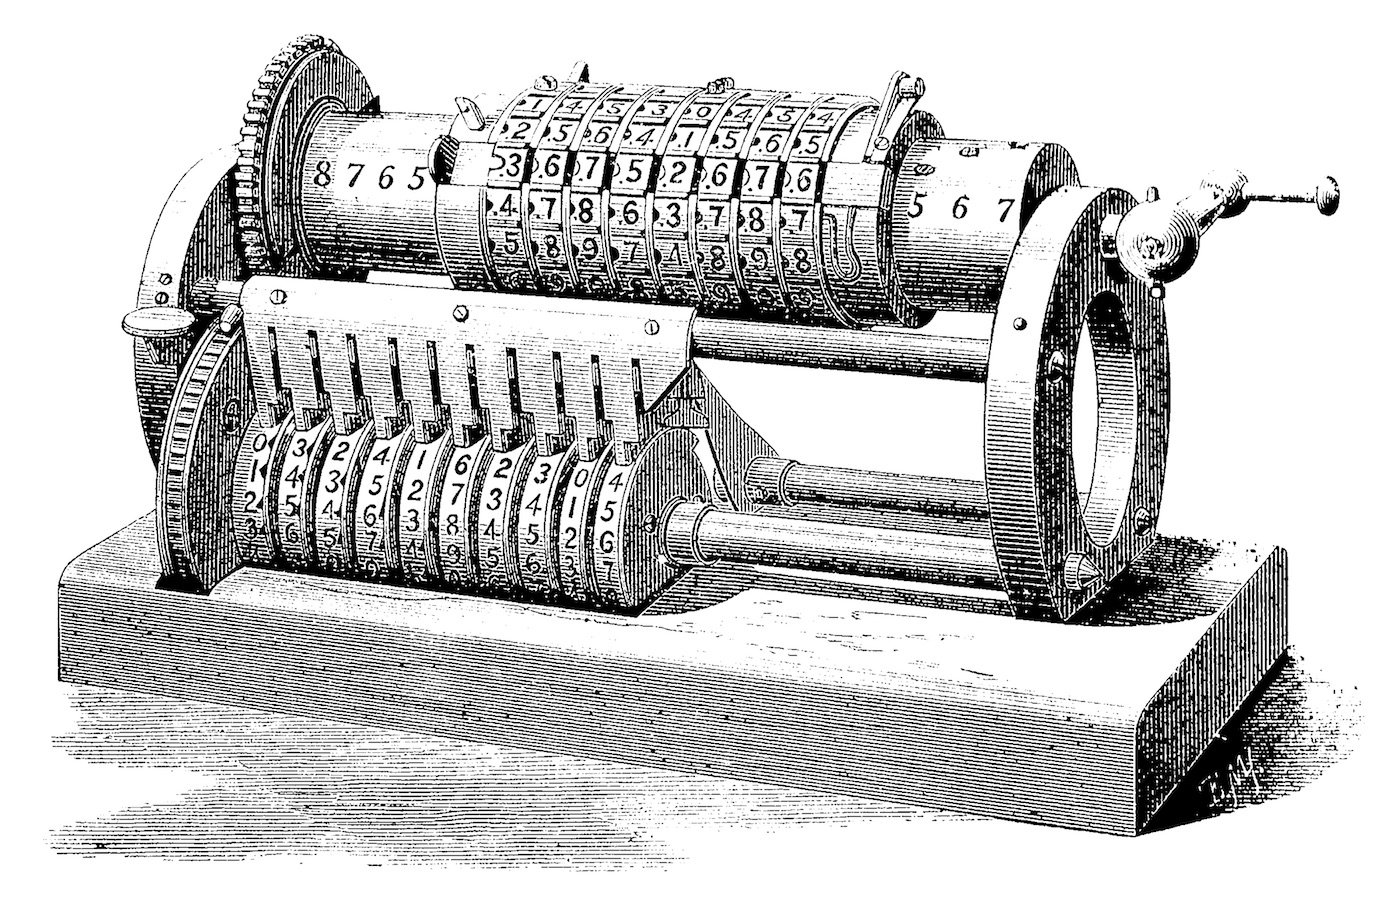 Grant mechanical calculation machine, 1877